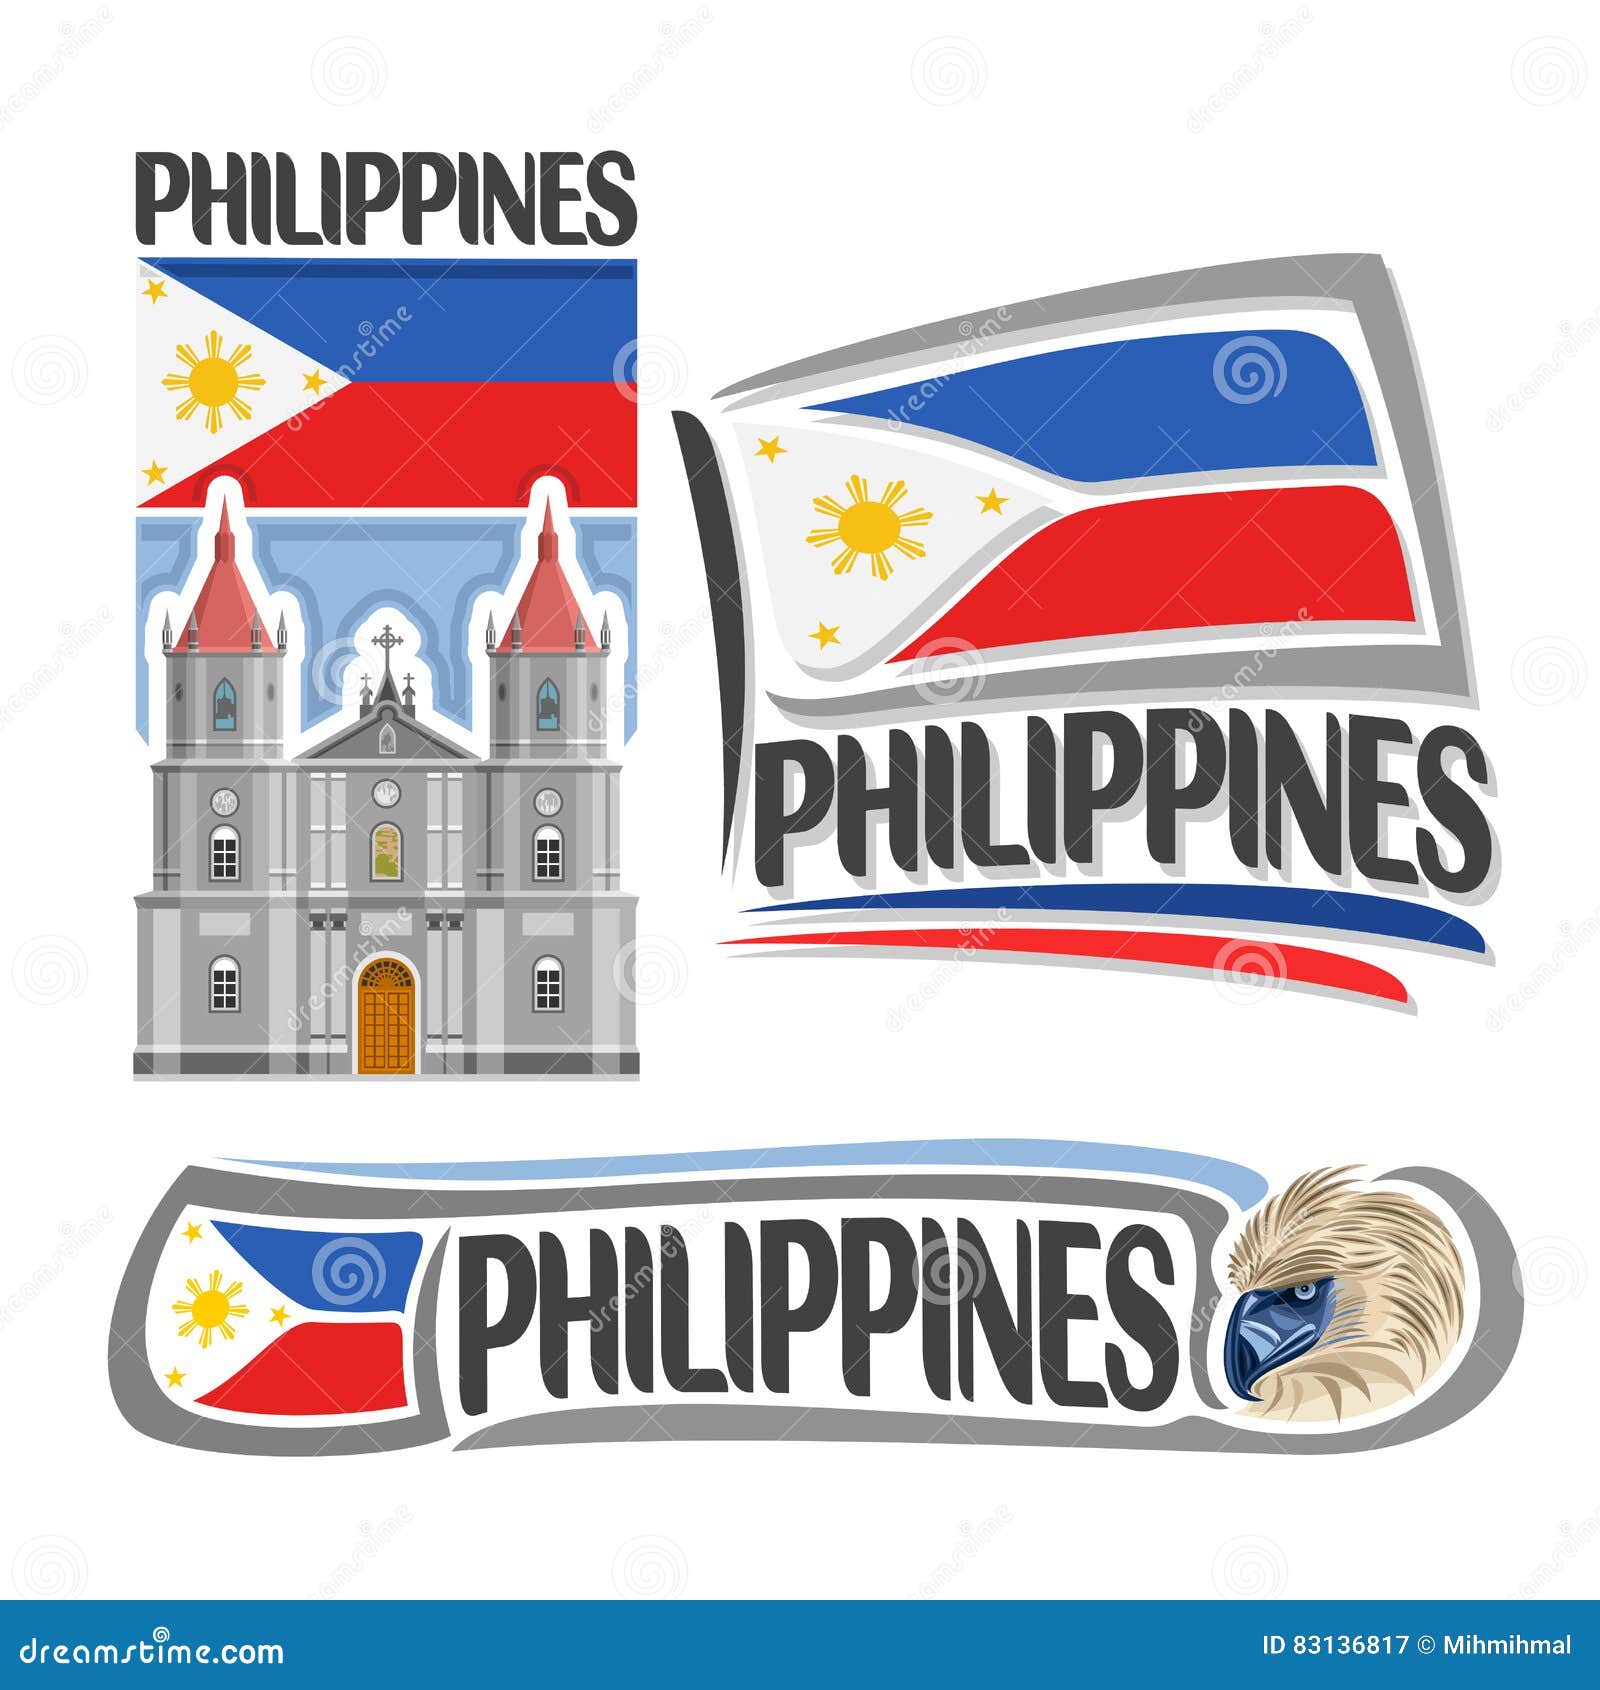  logo philippines